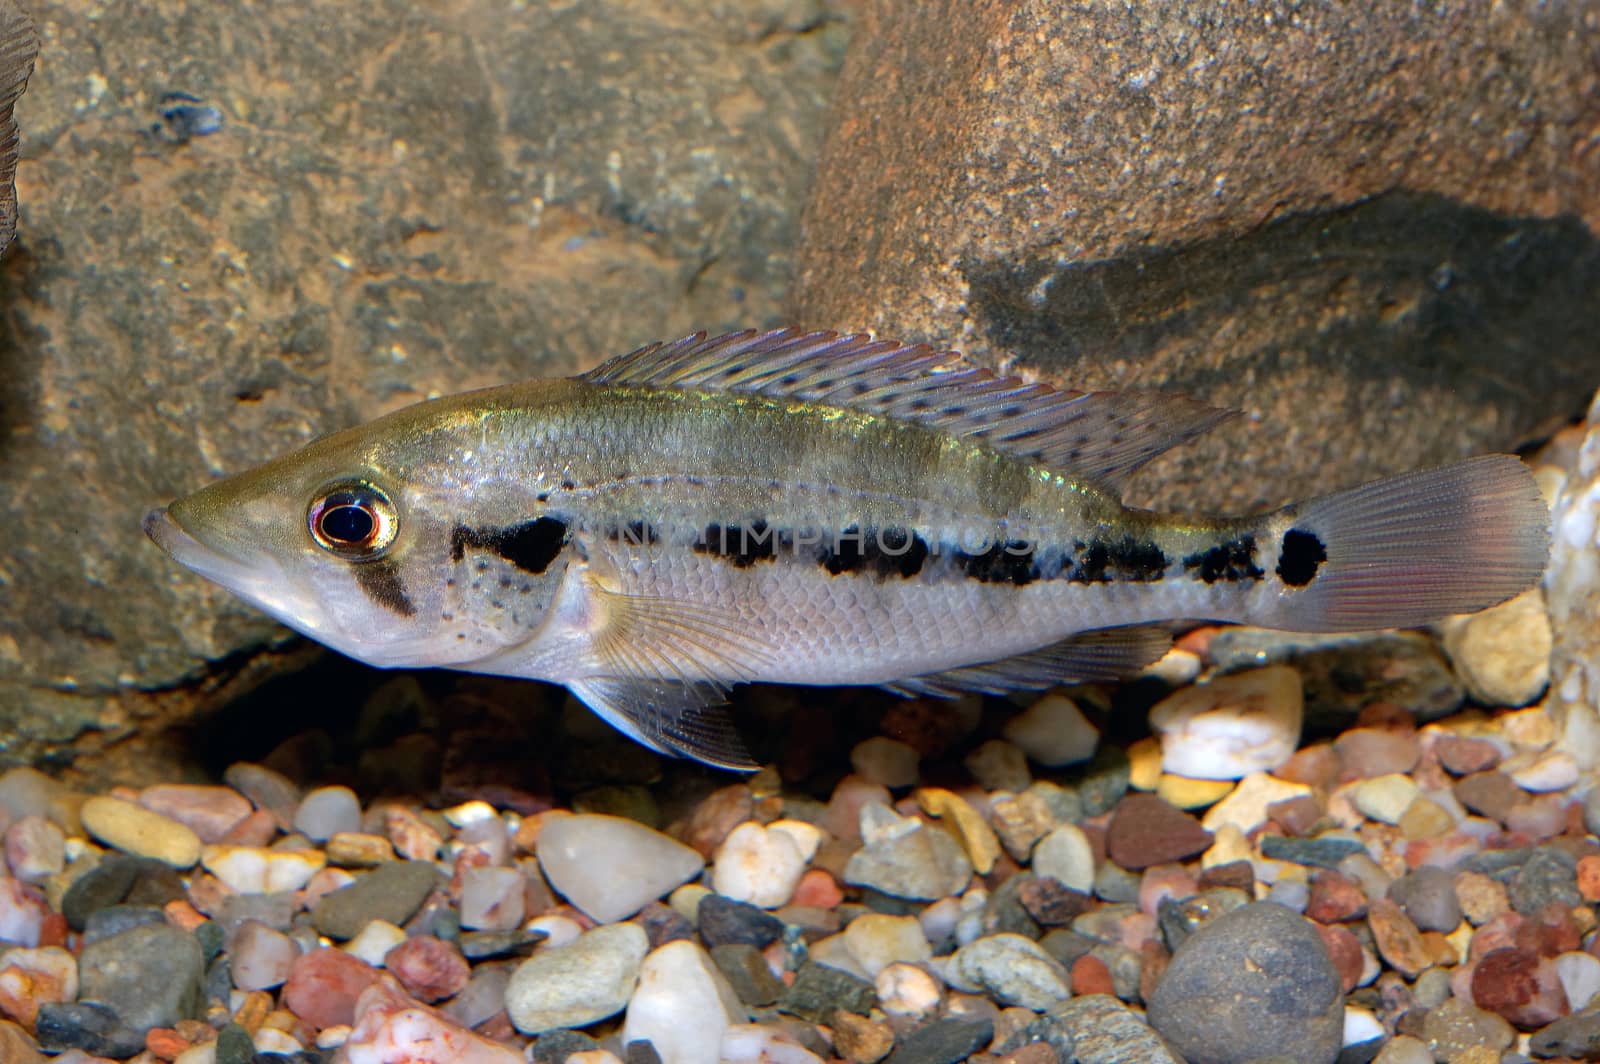 Nice grey cichlid fish from genus Petenia.